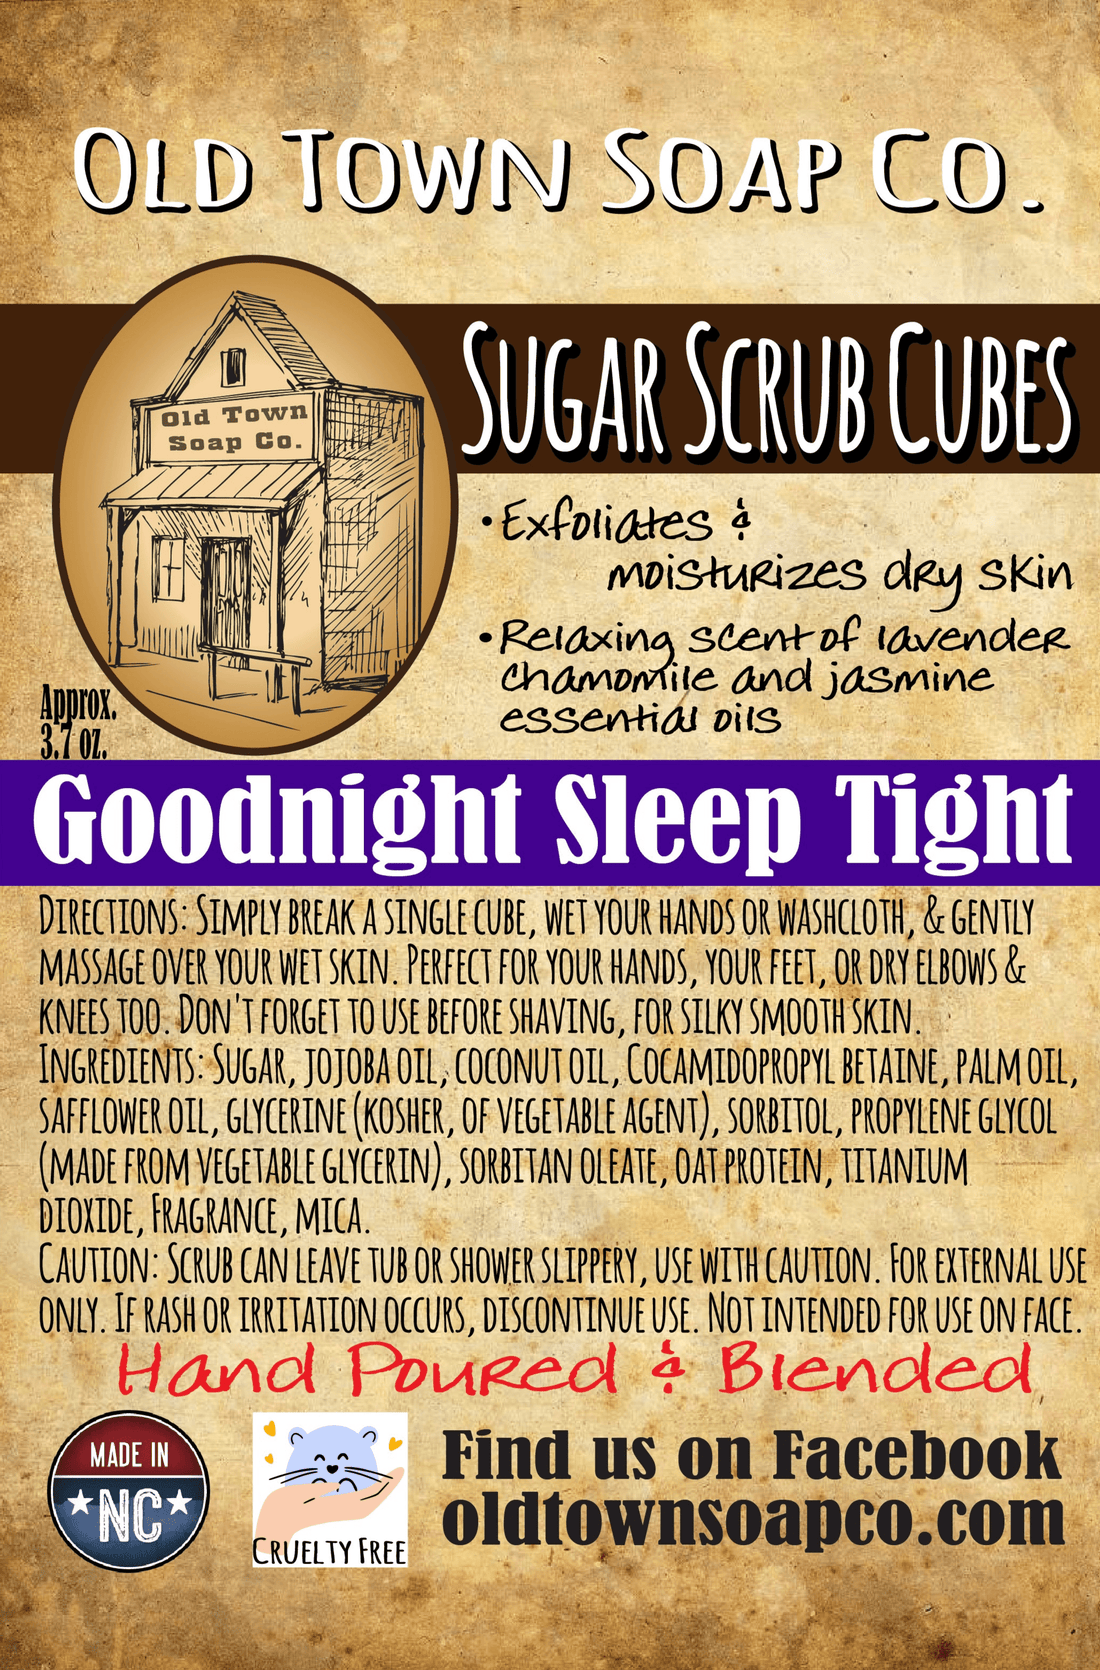 Goodnight Sleep Tight Sugar Scrub Cubes - Old Town Soap Co.